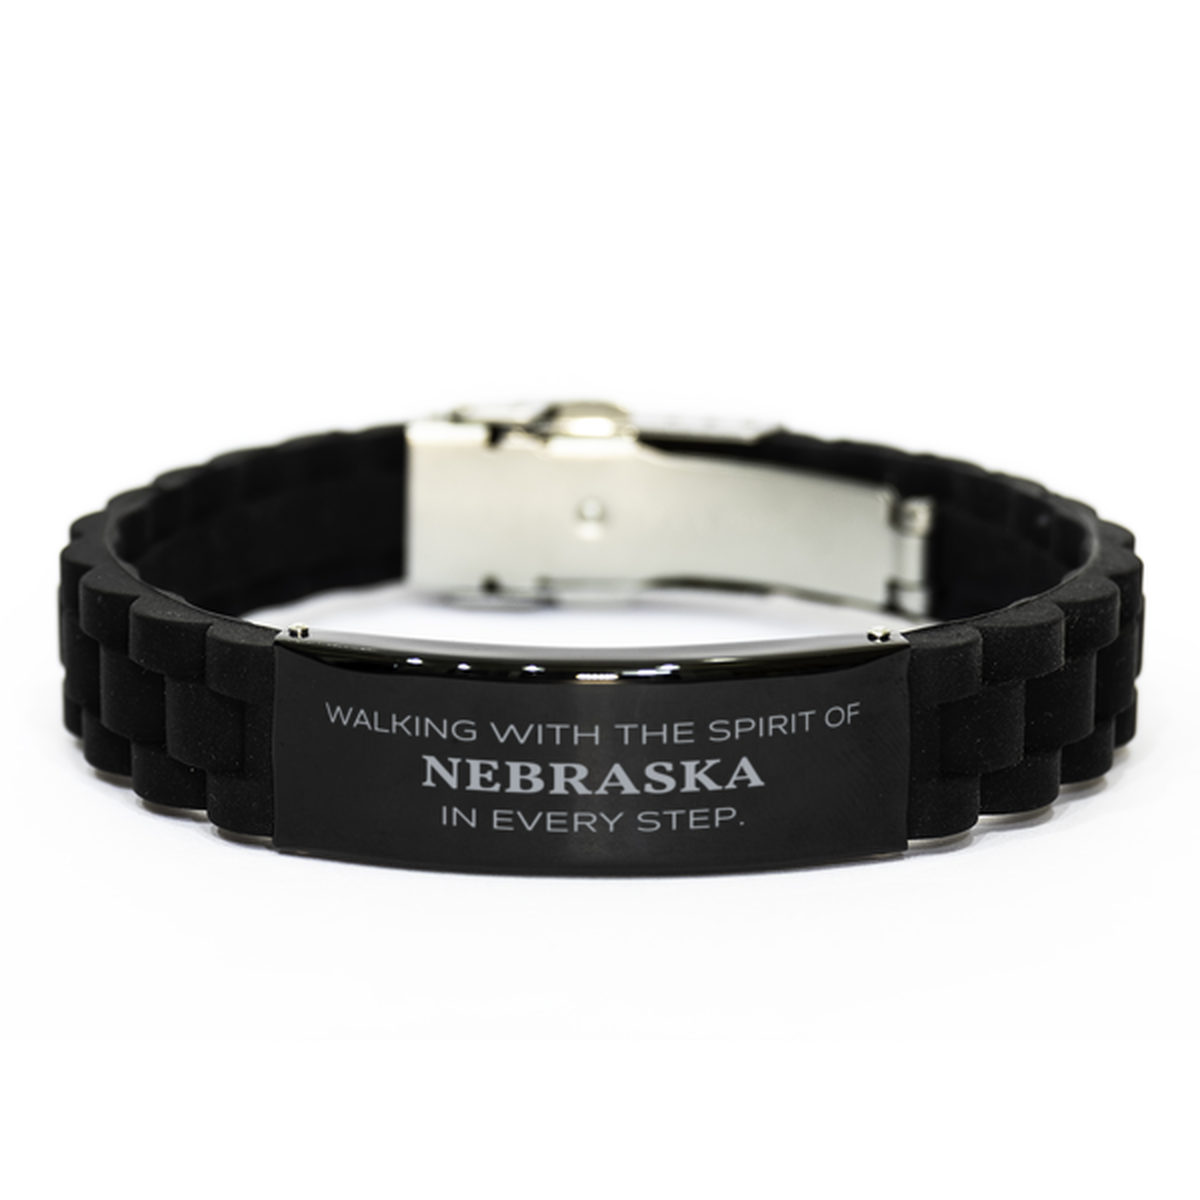 Nebraska Gifts, Walking with the spirit, Love Nebraska Birthday Christmas Black Glidelock Clasp Bracelet For Nebraska People, Men, Women, Friends